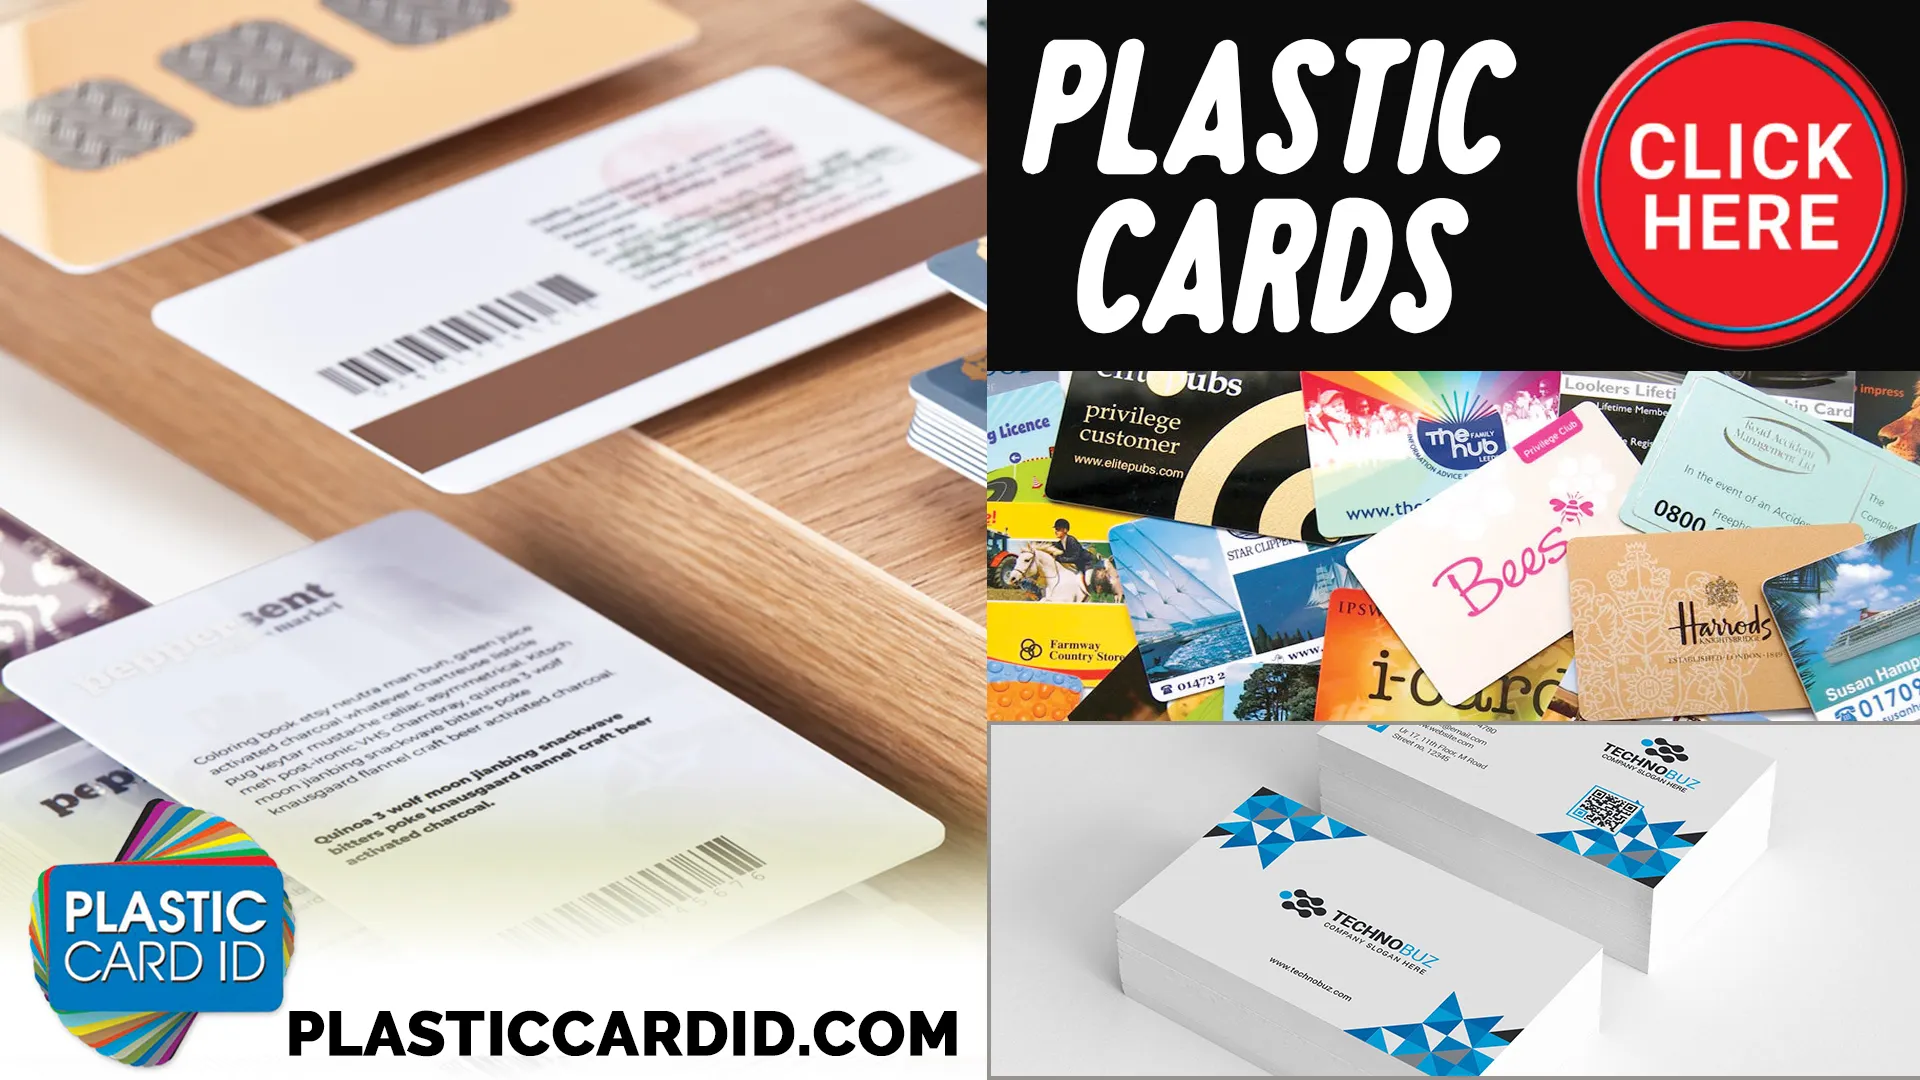  Plastic Card ID
's Unwavering Customer Service Commitment 